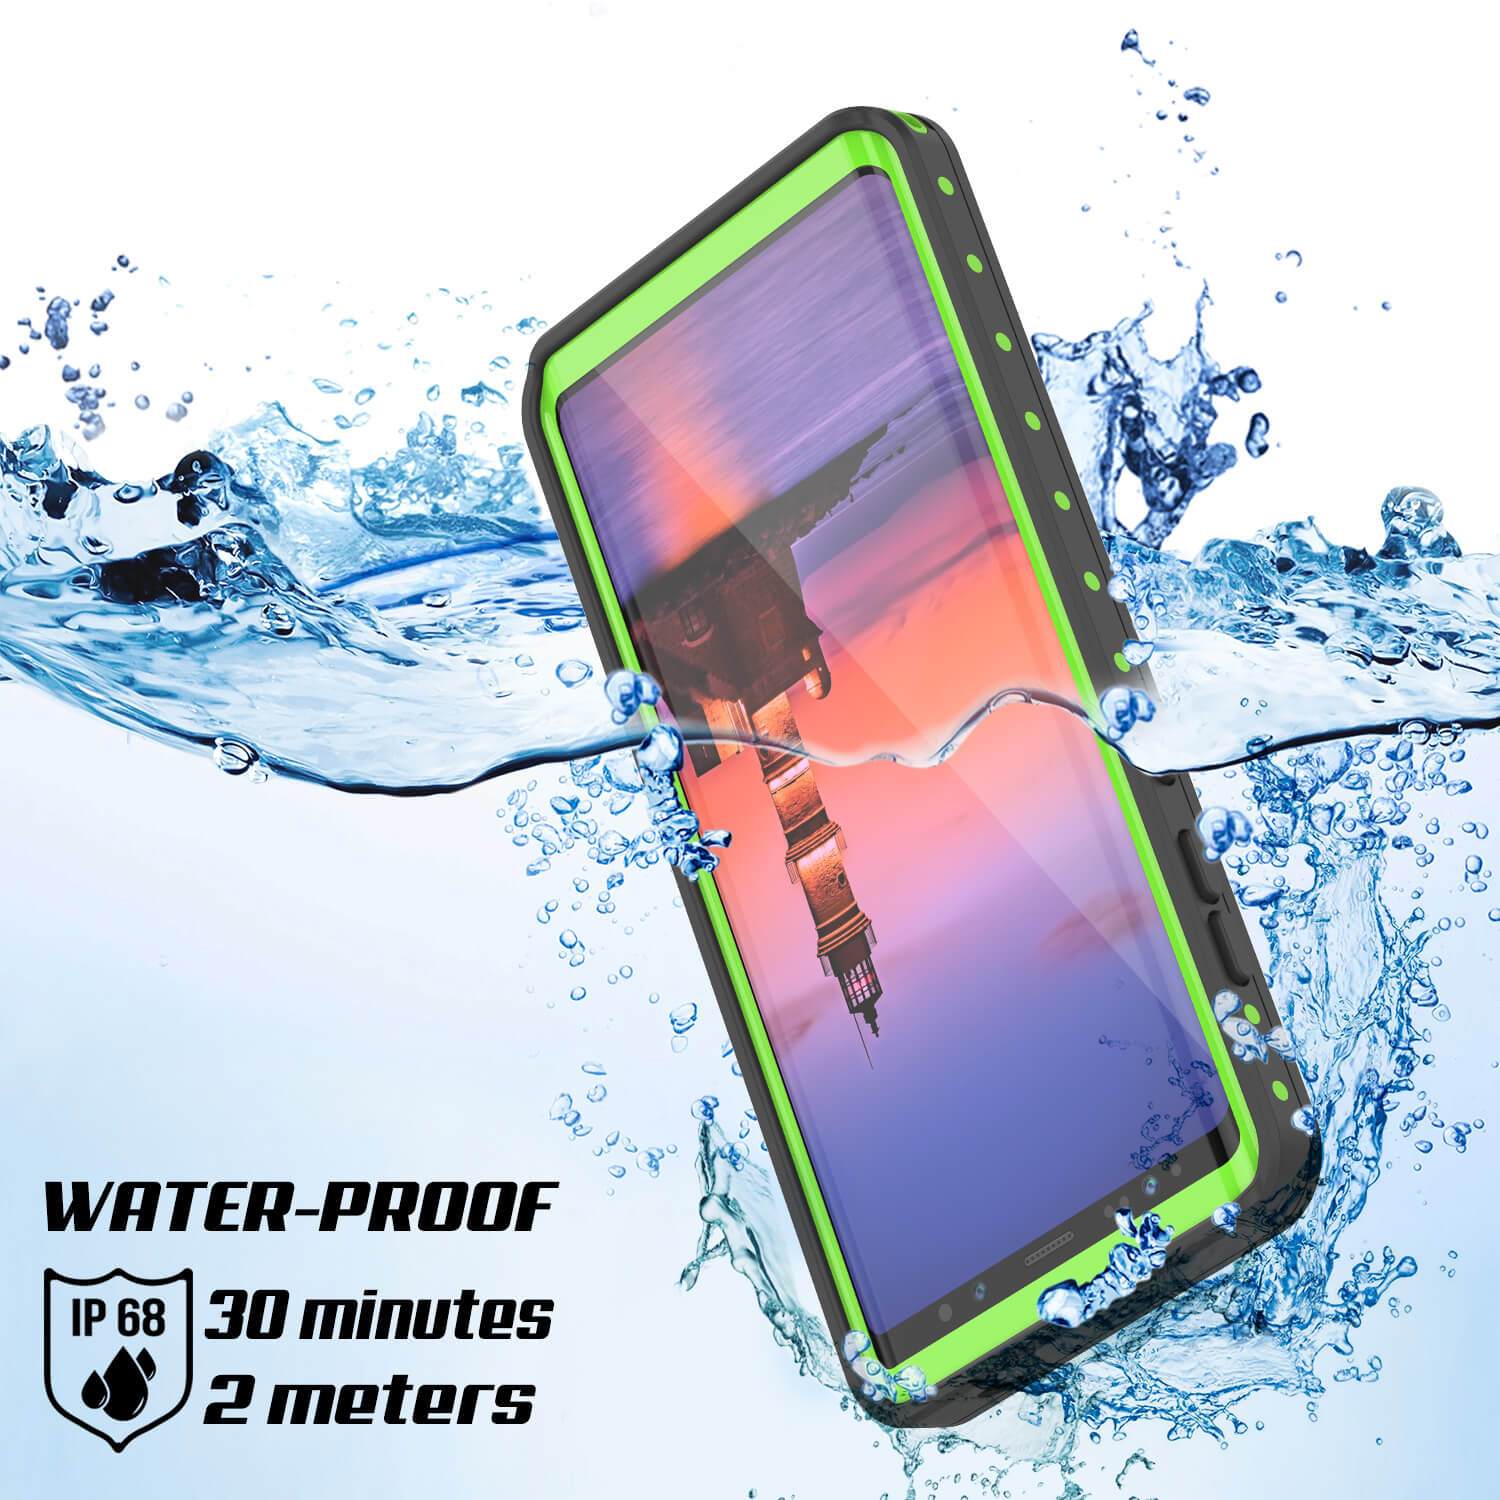 Galaxy Note 9 Waterproof Case PunkCase StudStar Light Green Thin 6.6ft Underwater ShockProof